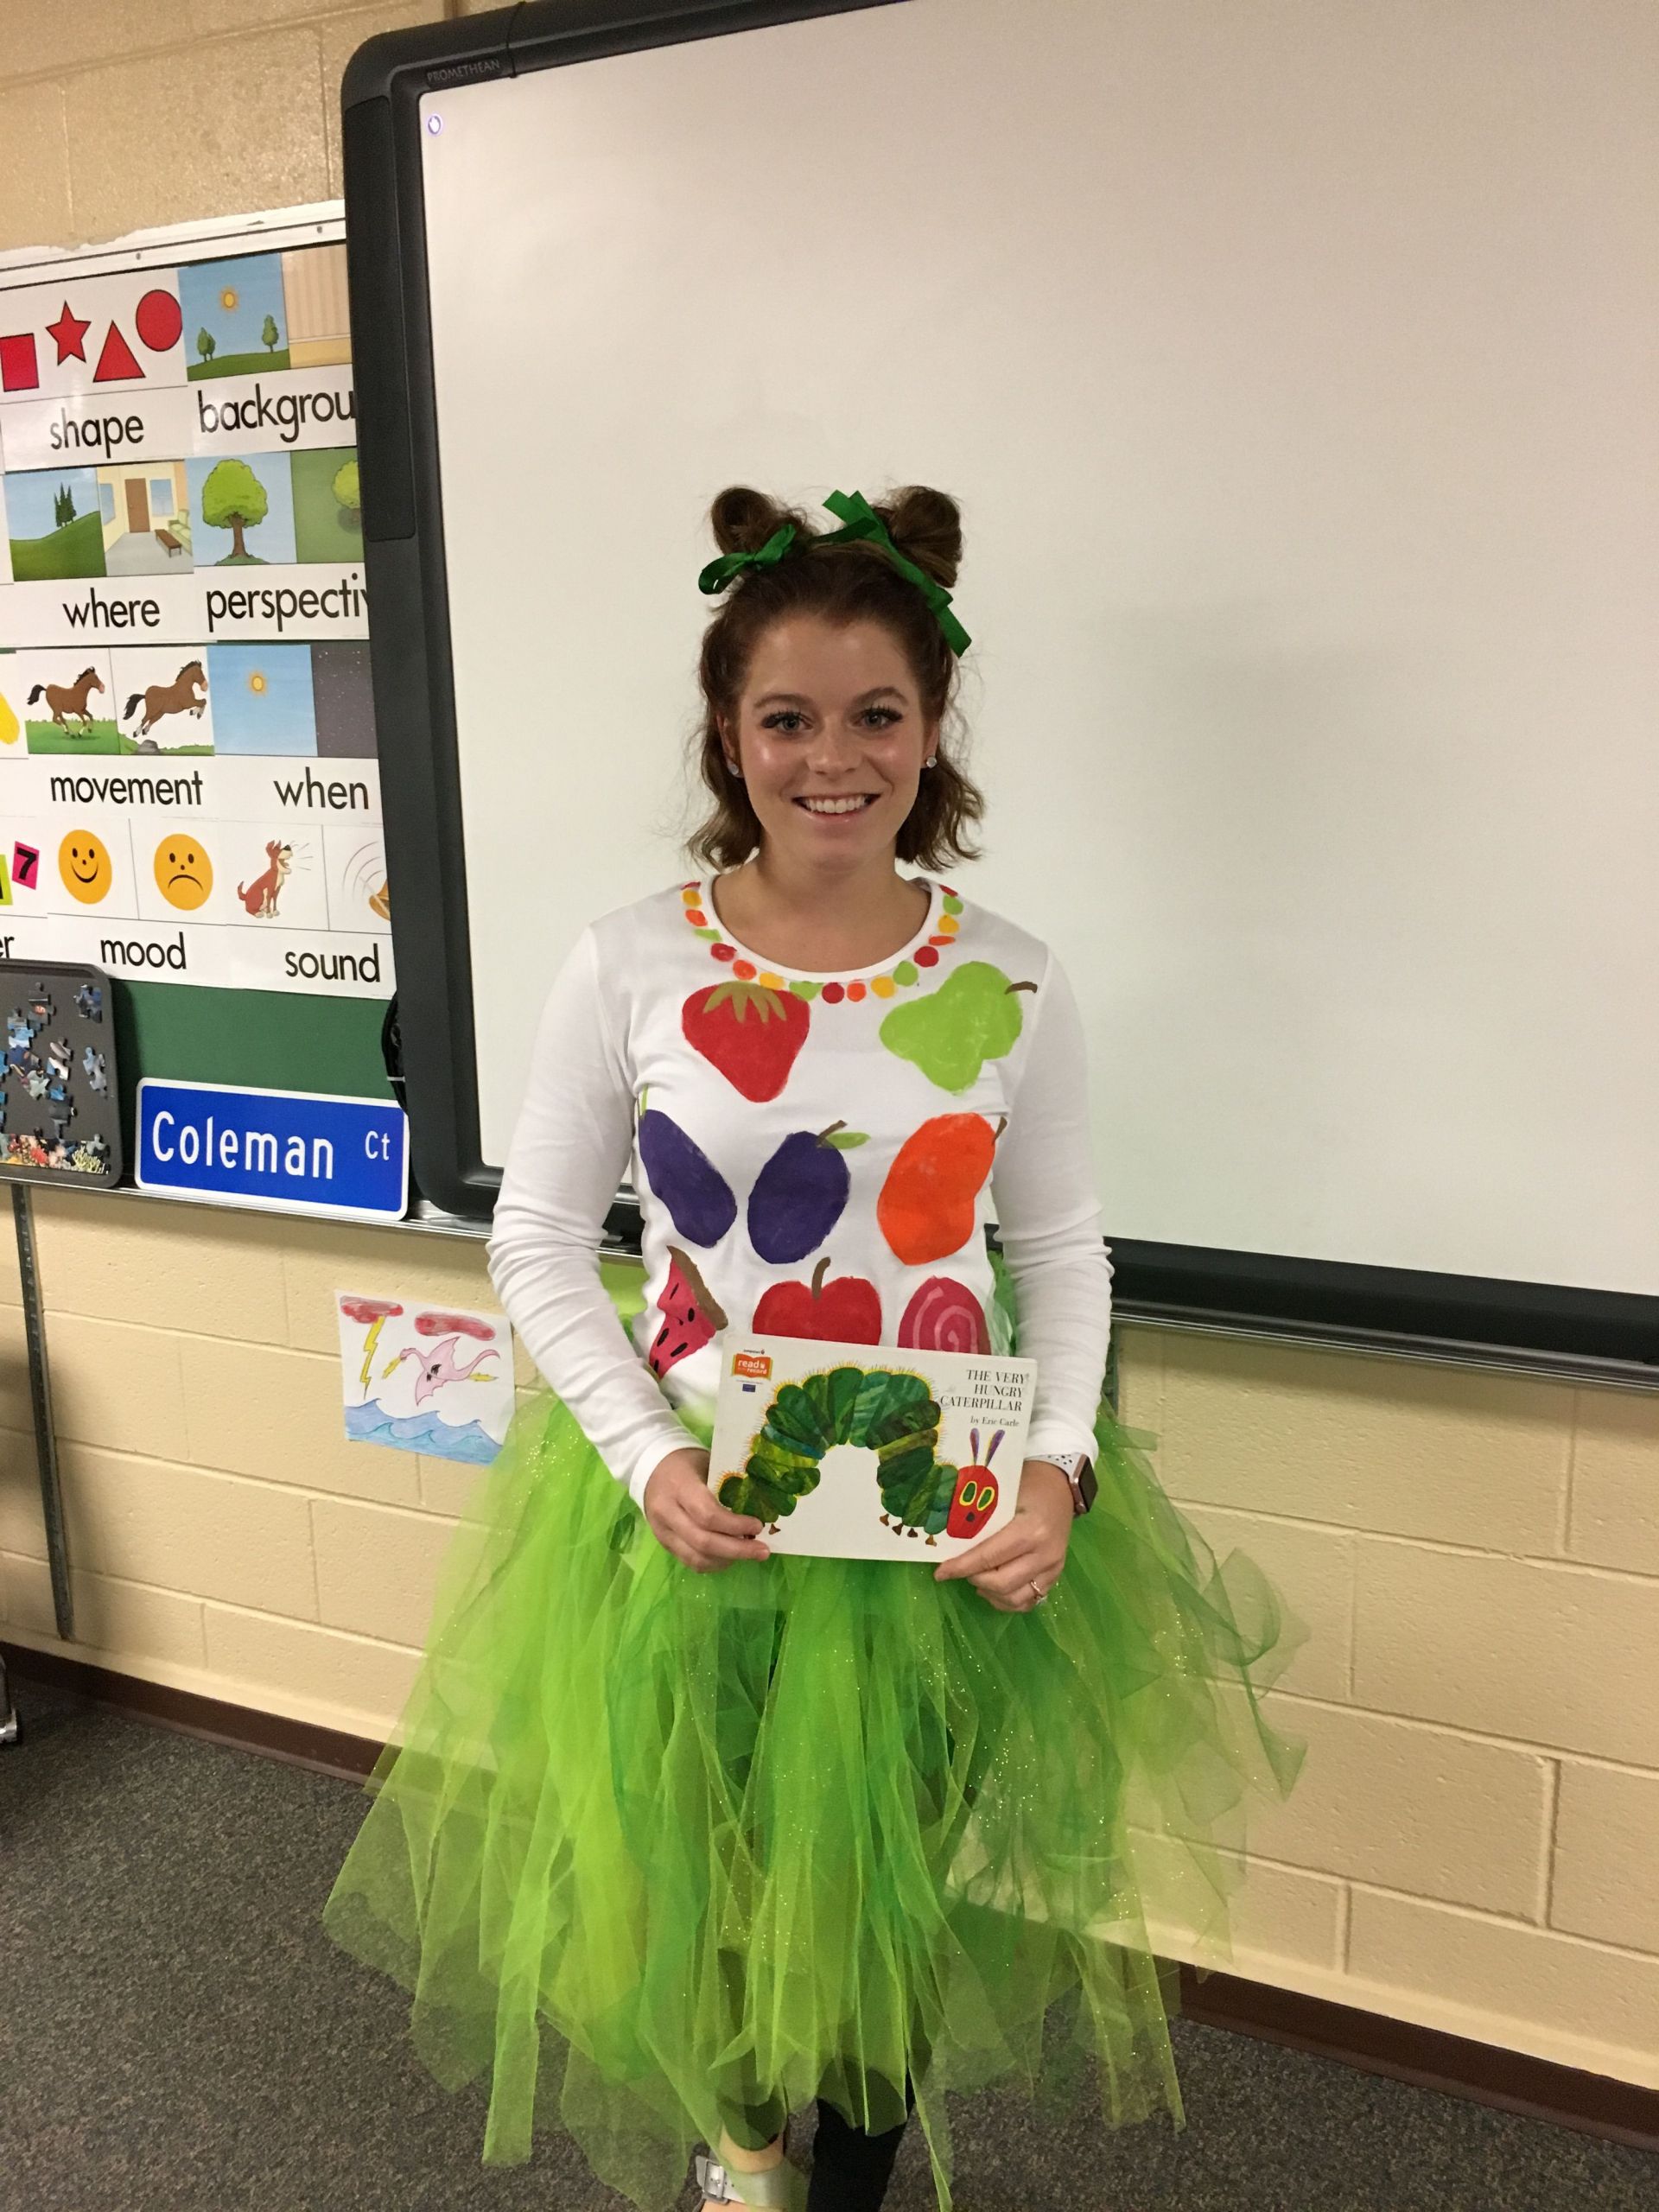 Caterpillar Costume DIY
 DIY very hungry caterpillar costume for teachers